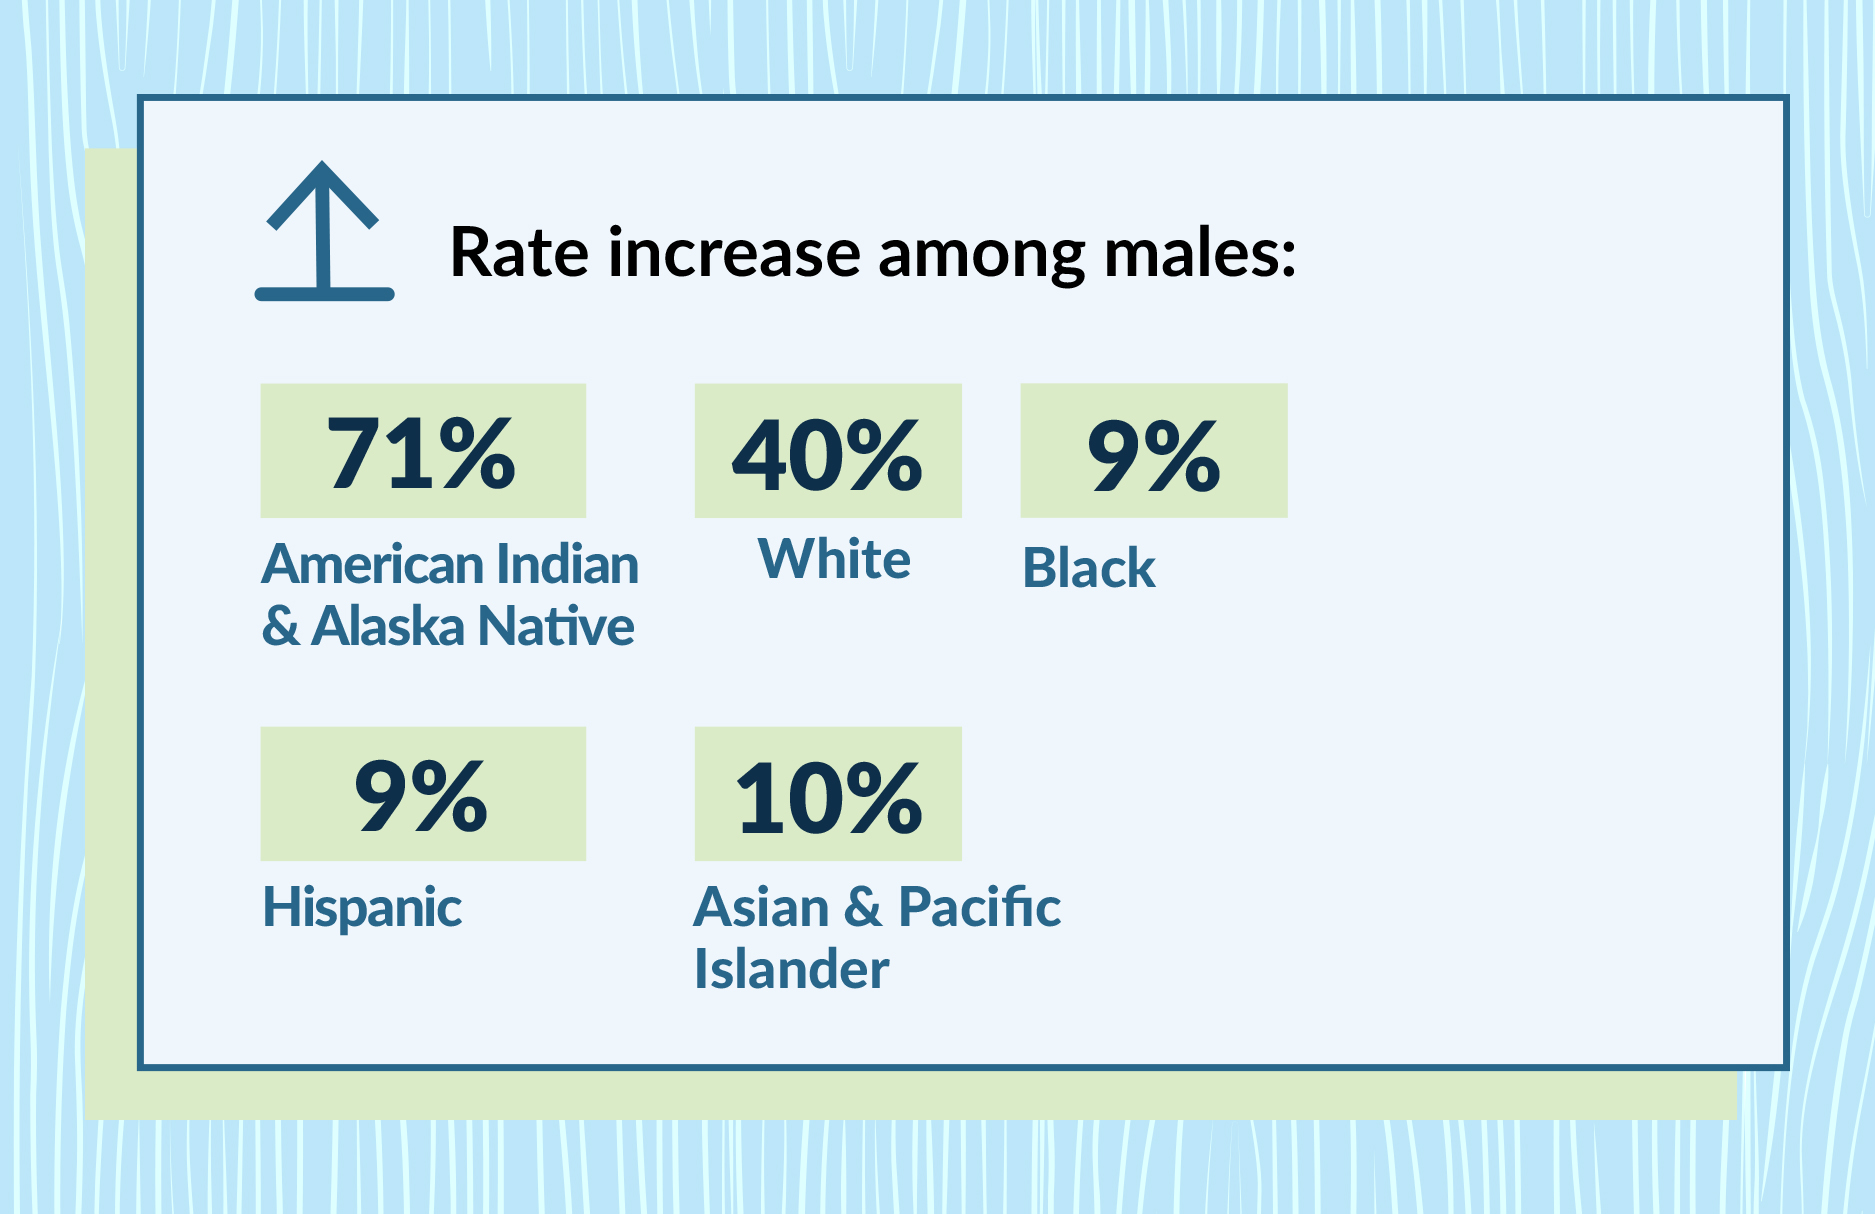 Rate increase among males: 71% American Indian & Alaska Native, 40% White, 9 % Black, 9% Hispanic, and 10% Asian & Pacific Islander